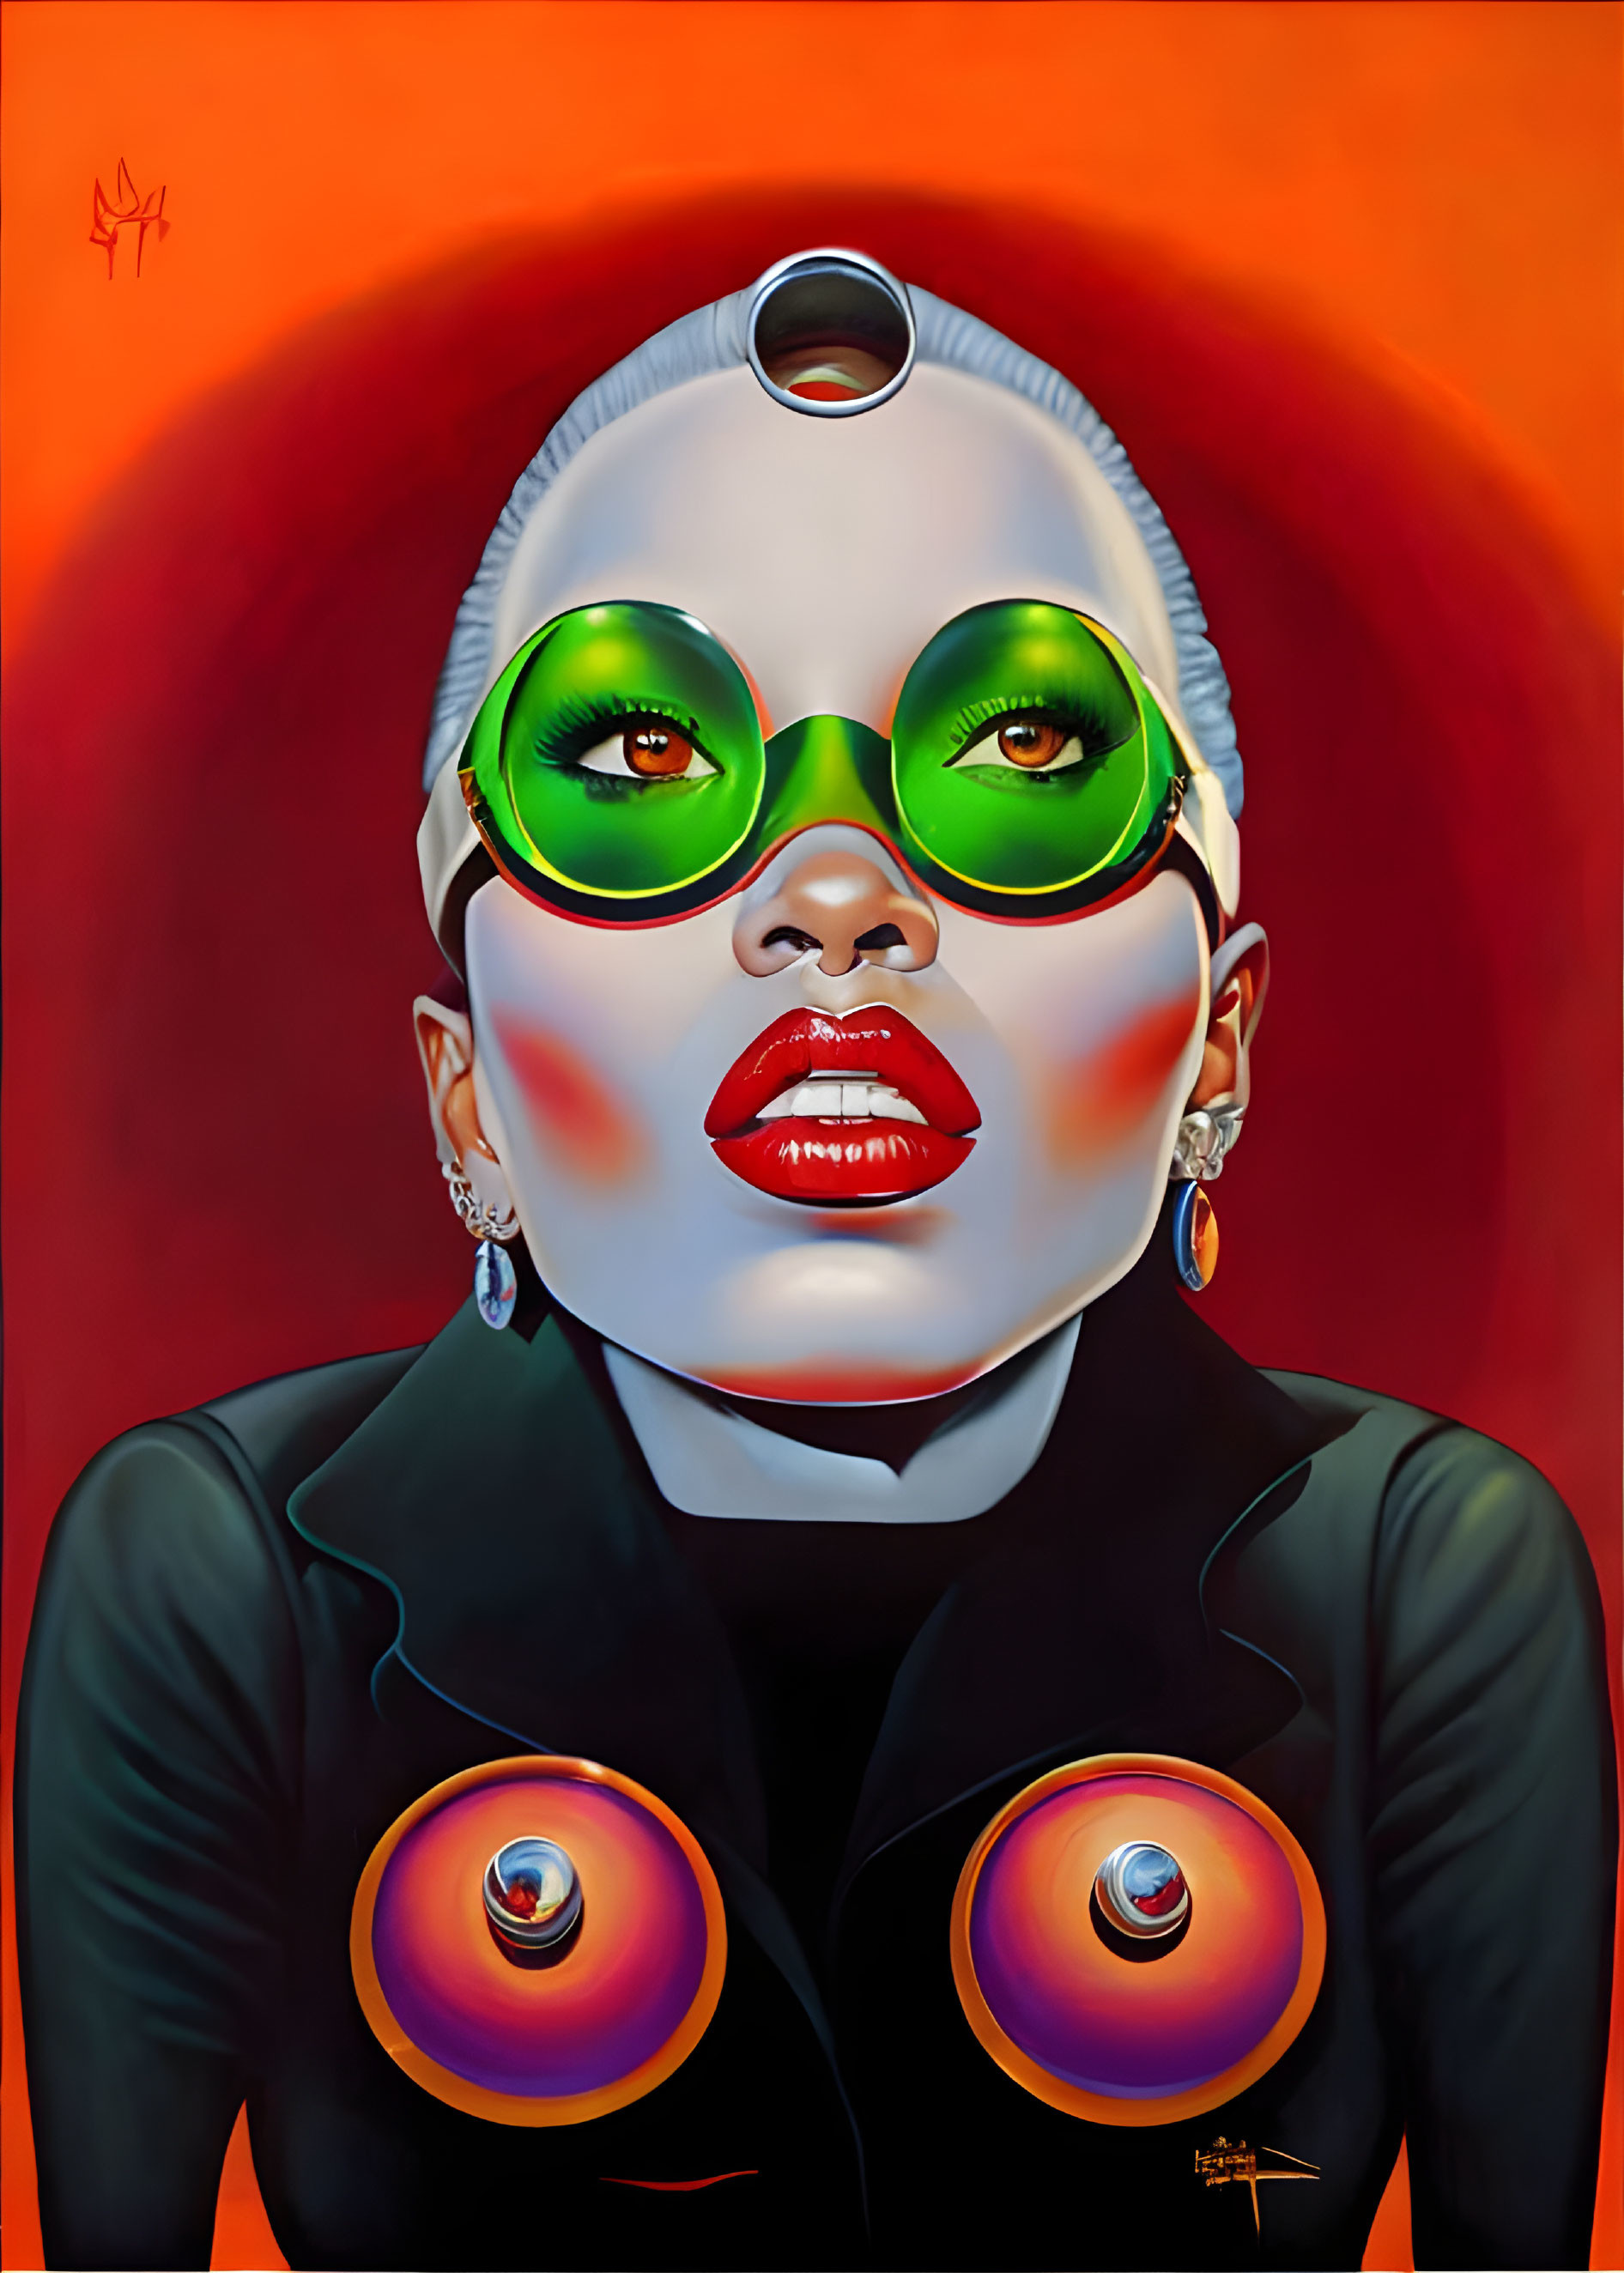 Stylized portrait of woman in green sunglasses and hoop earrings